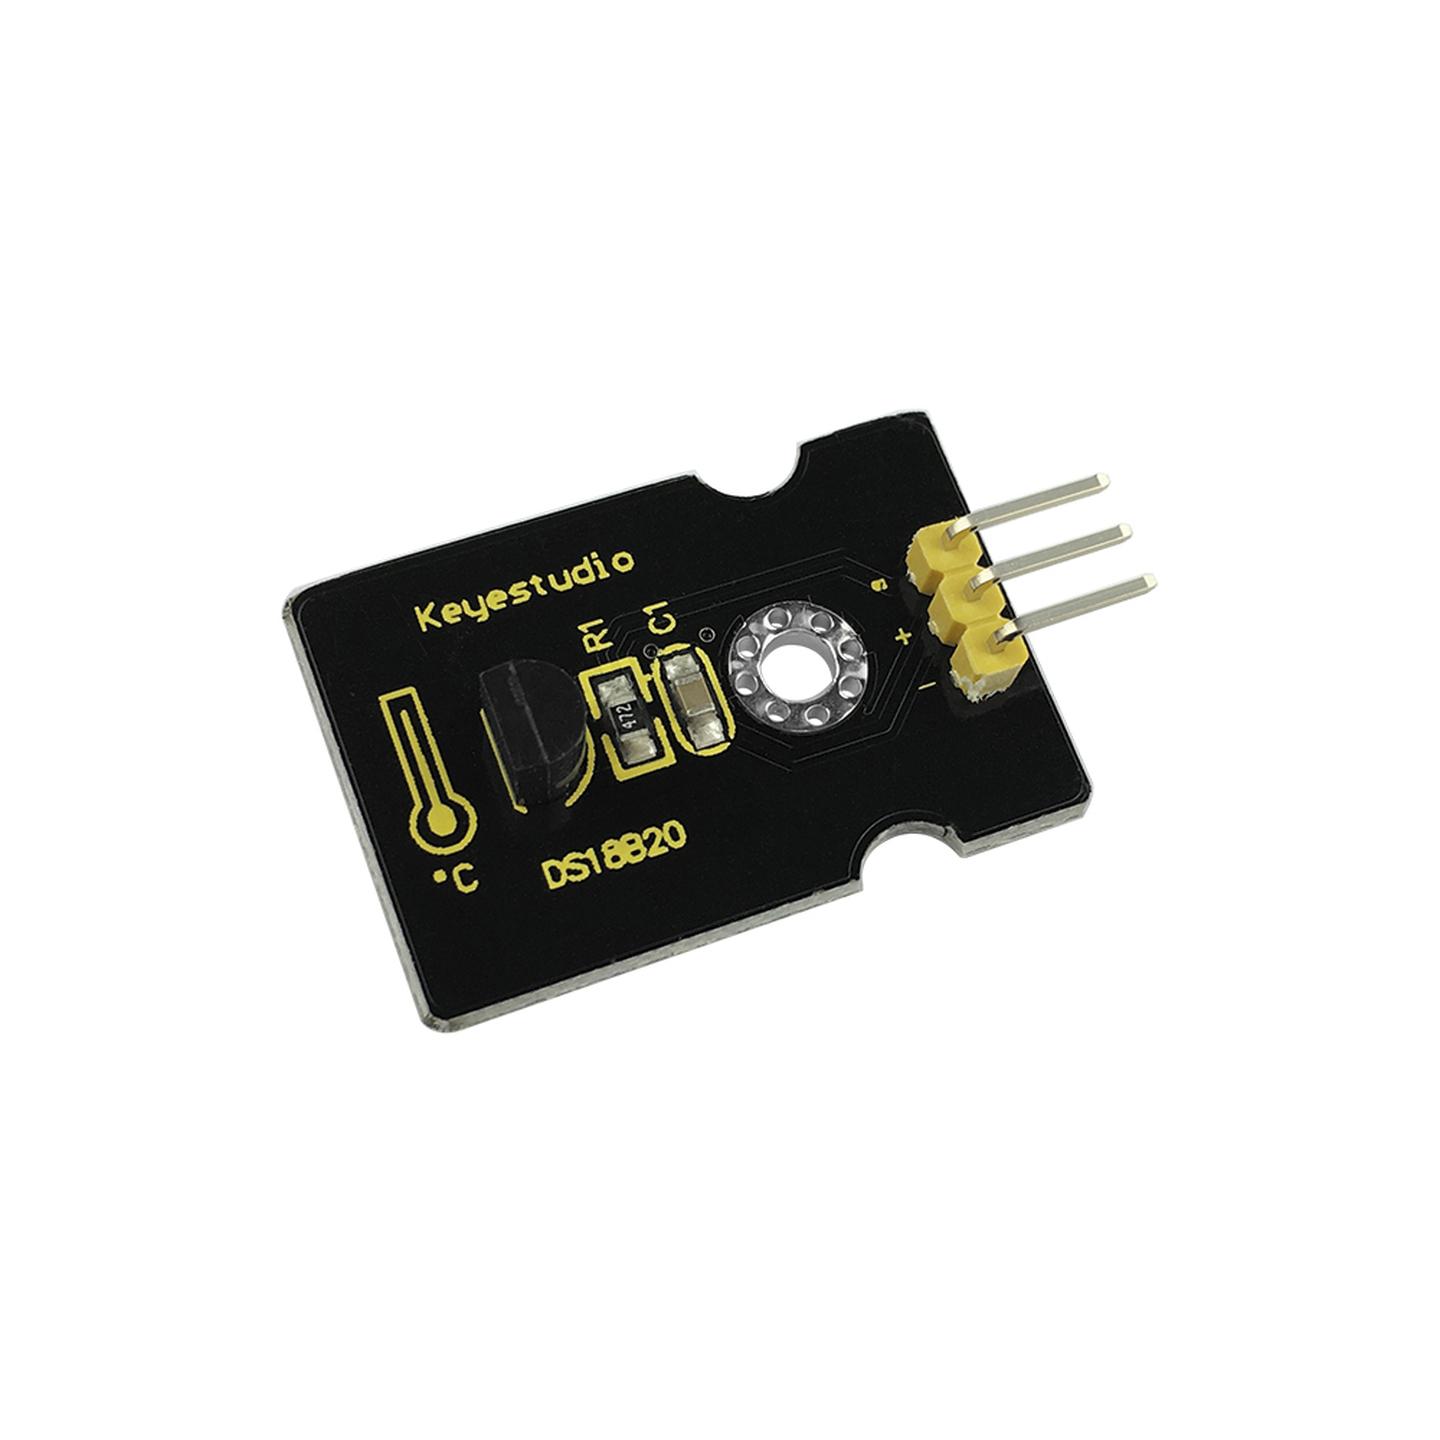 Arduino Compatible Digital Temperature Sensor